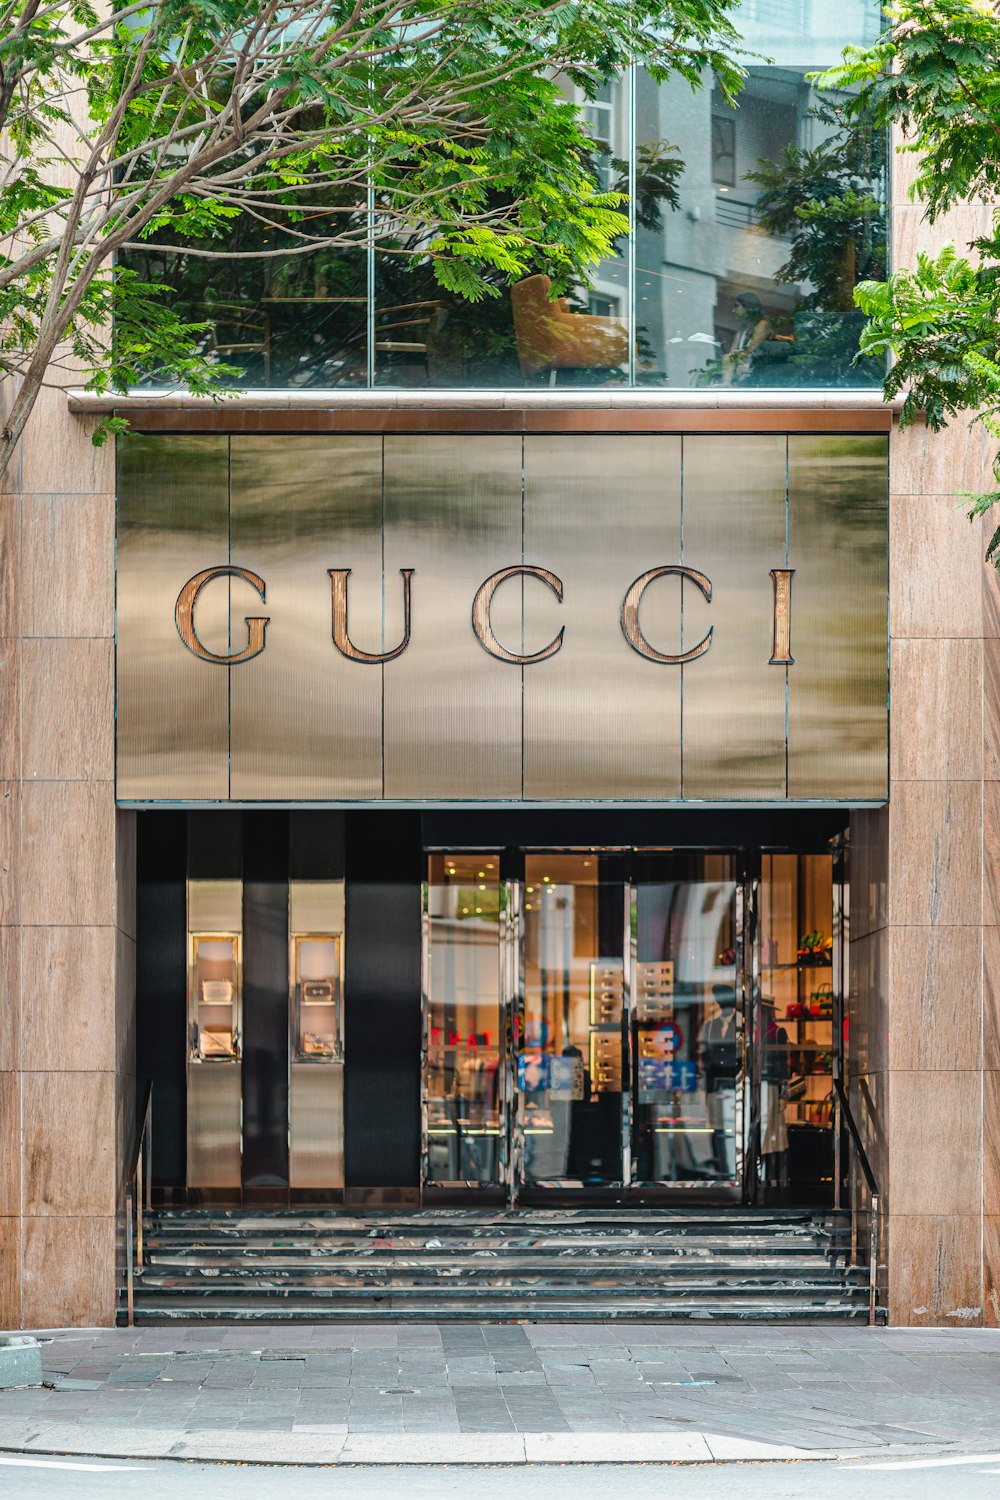 L'ingresso di un negozio Gucci in una città